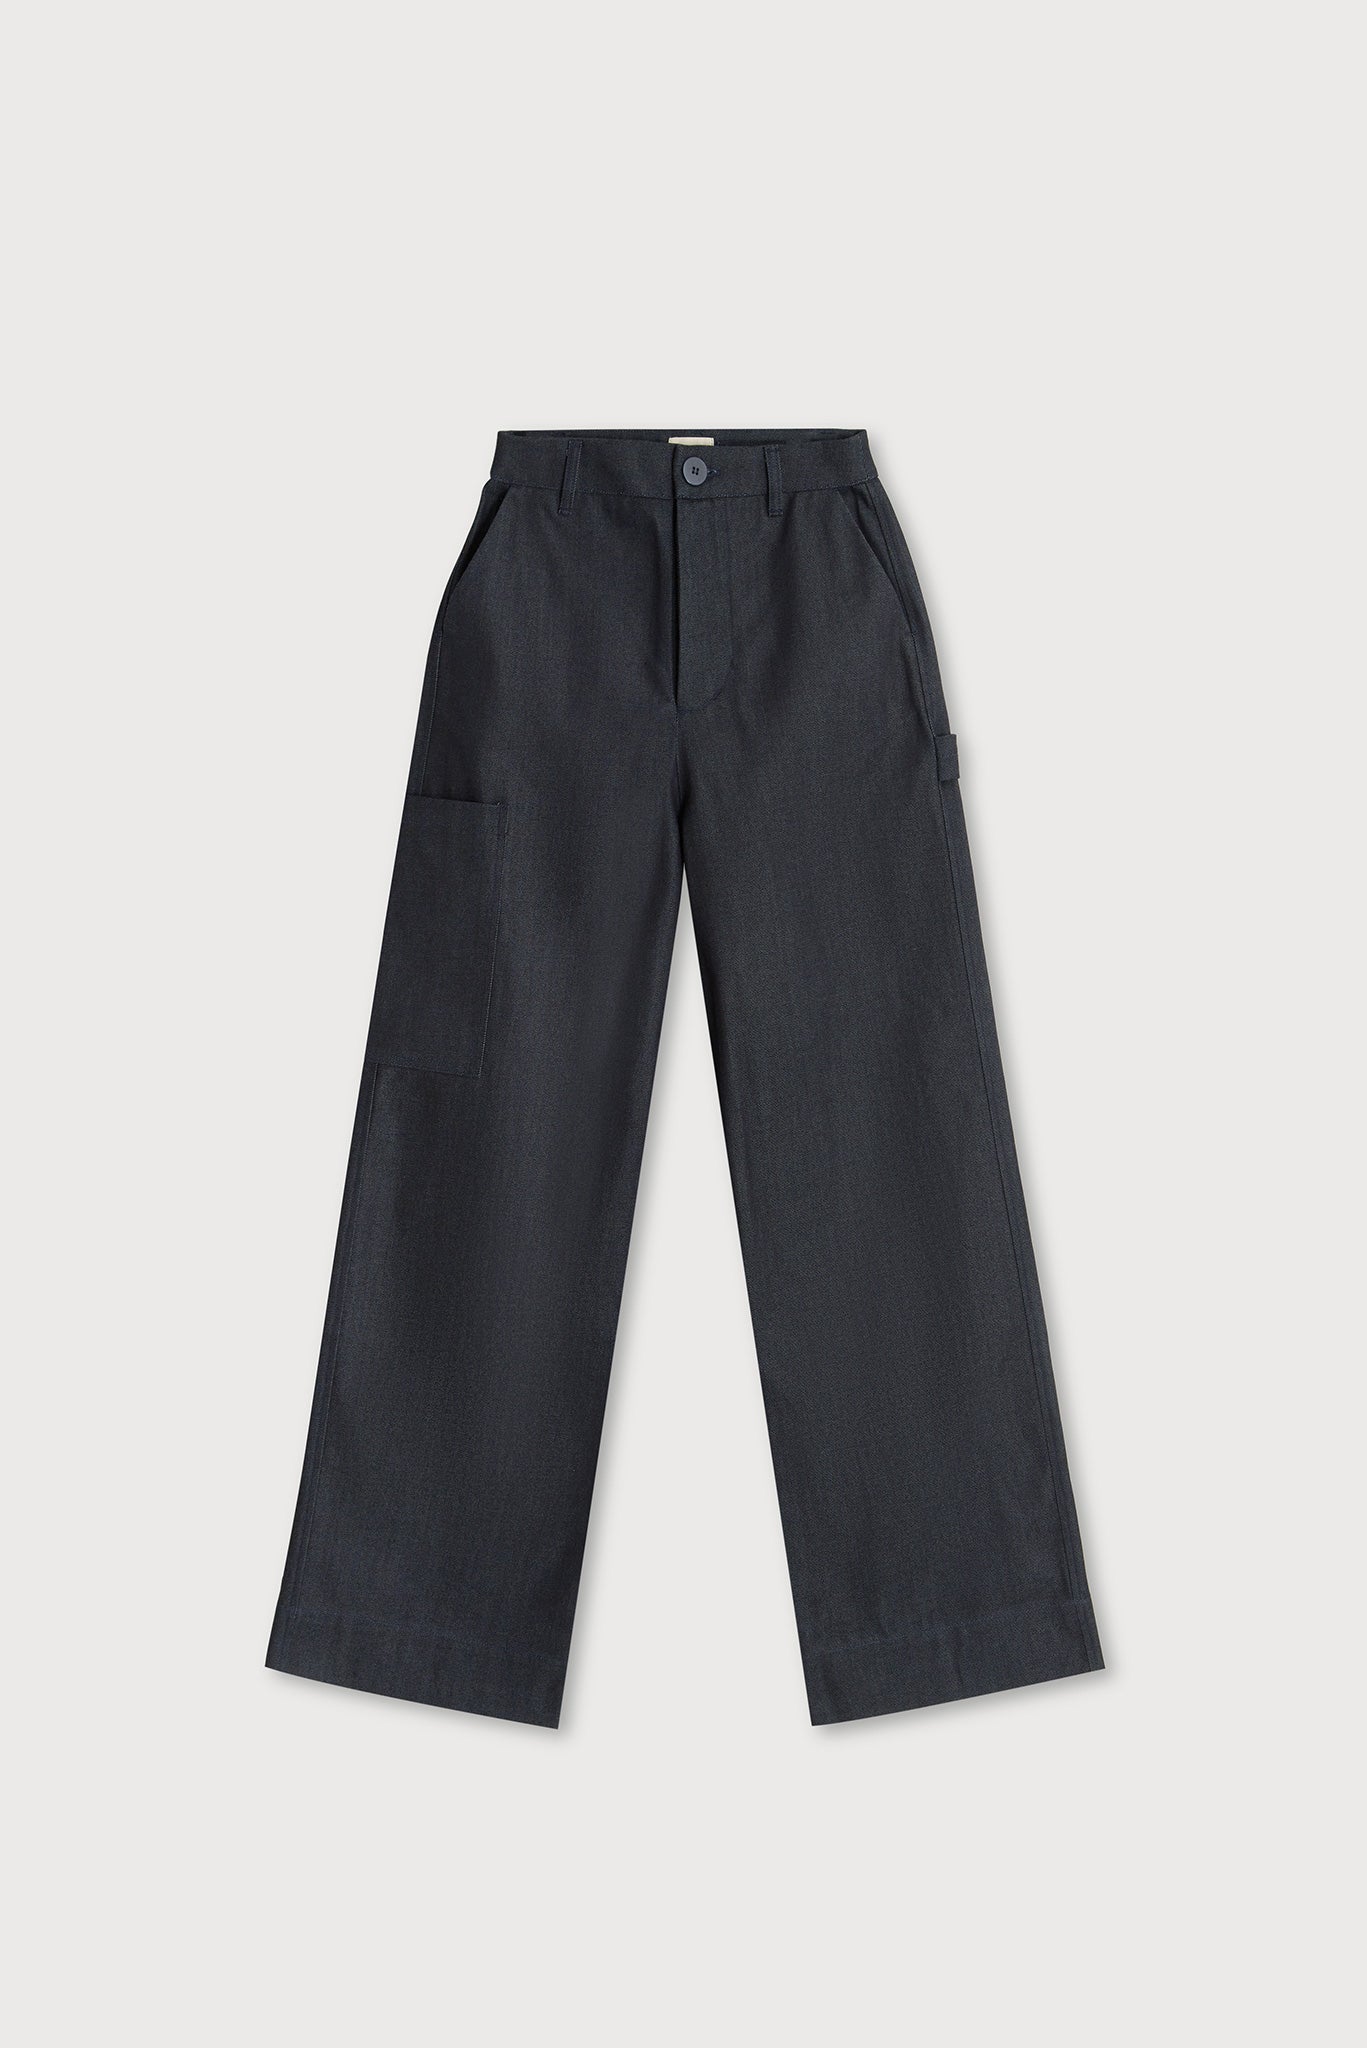 A.60 Dark Indigo Raw Denim Trousers in organic cotton